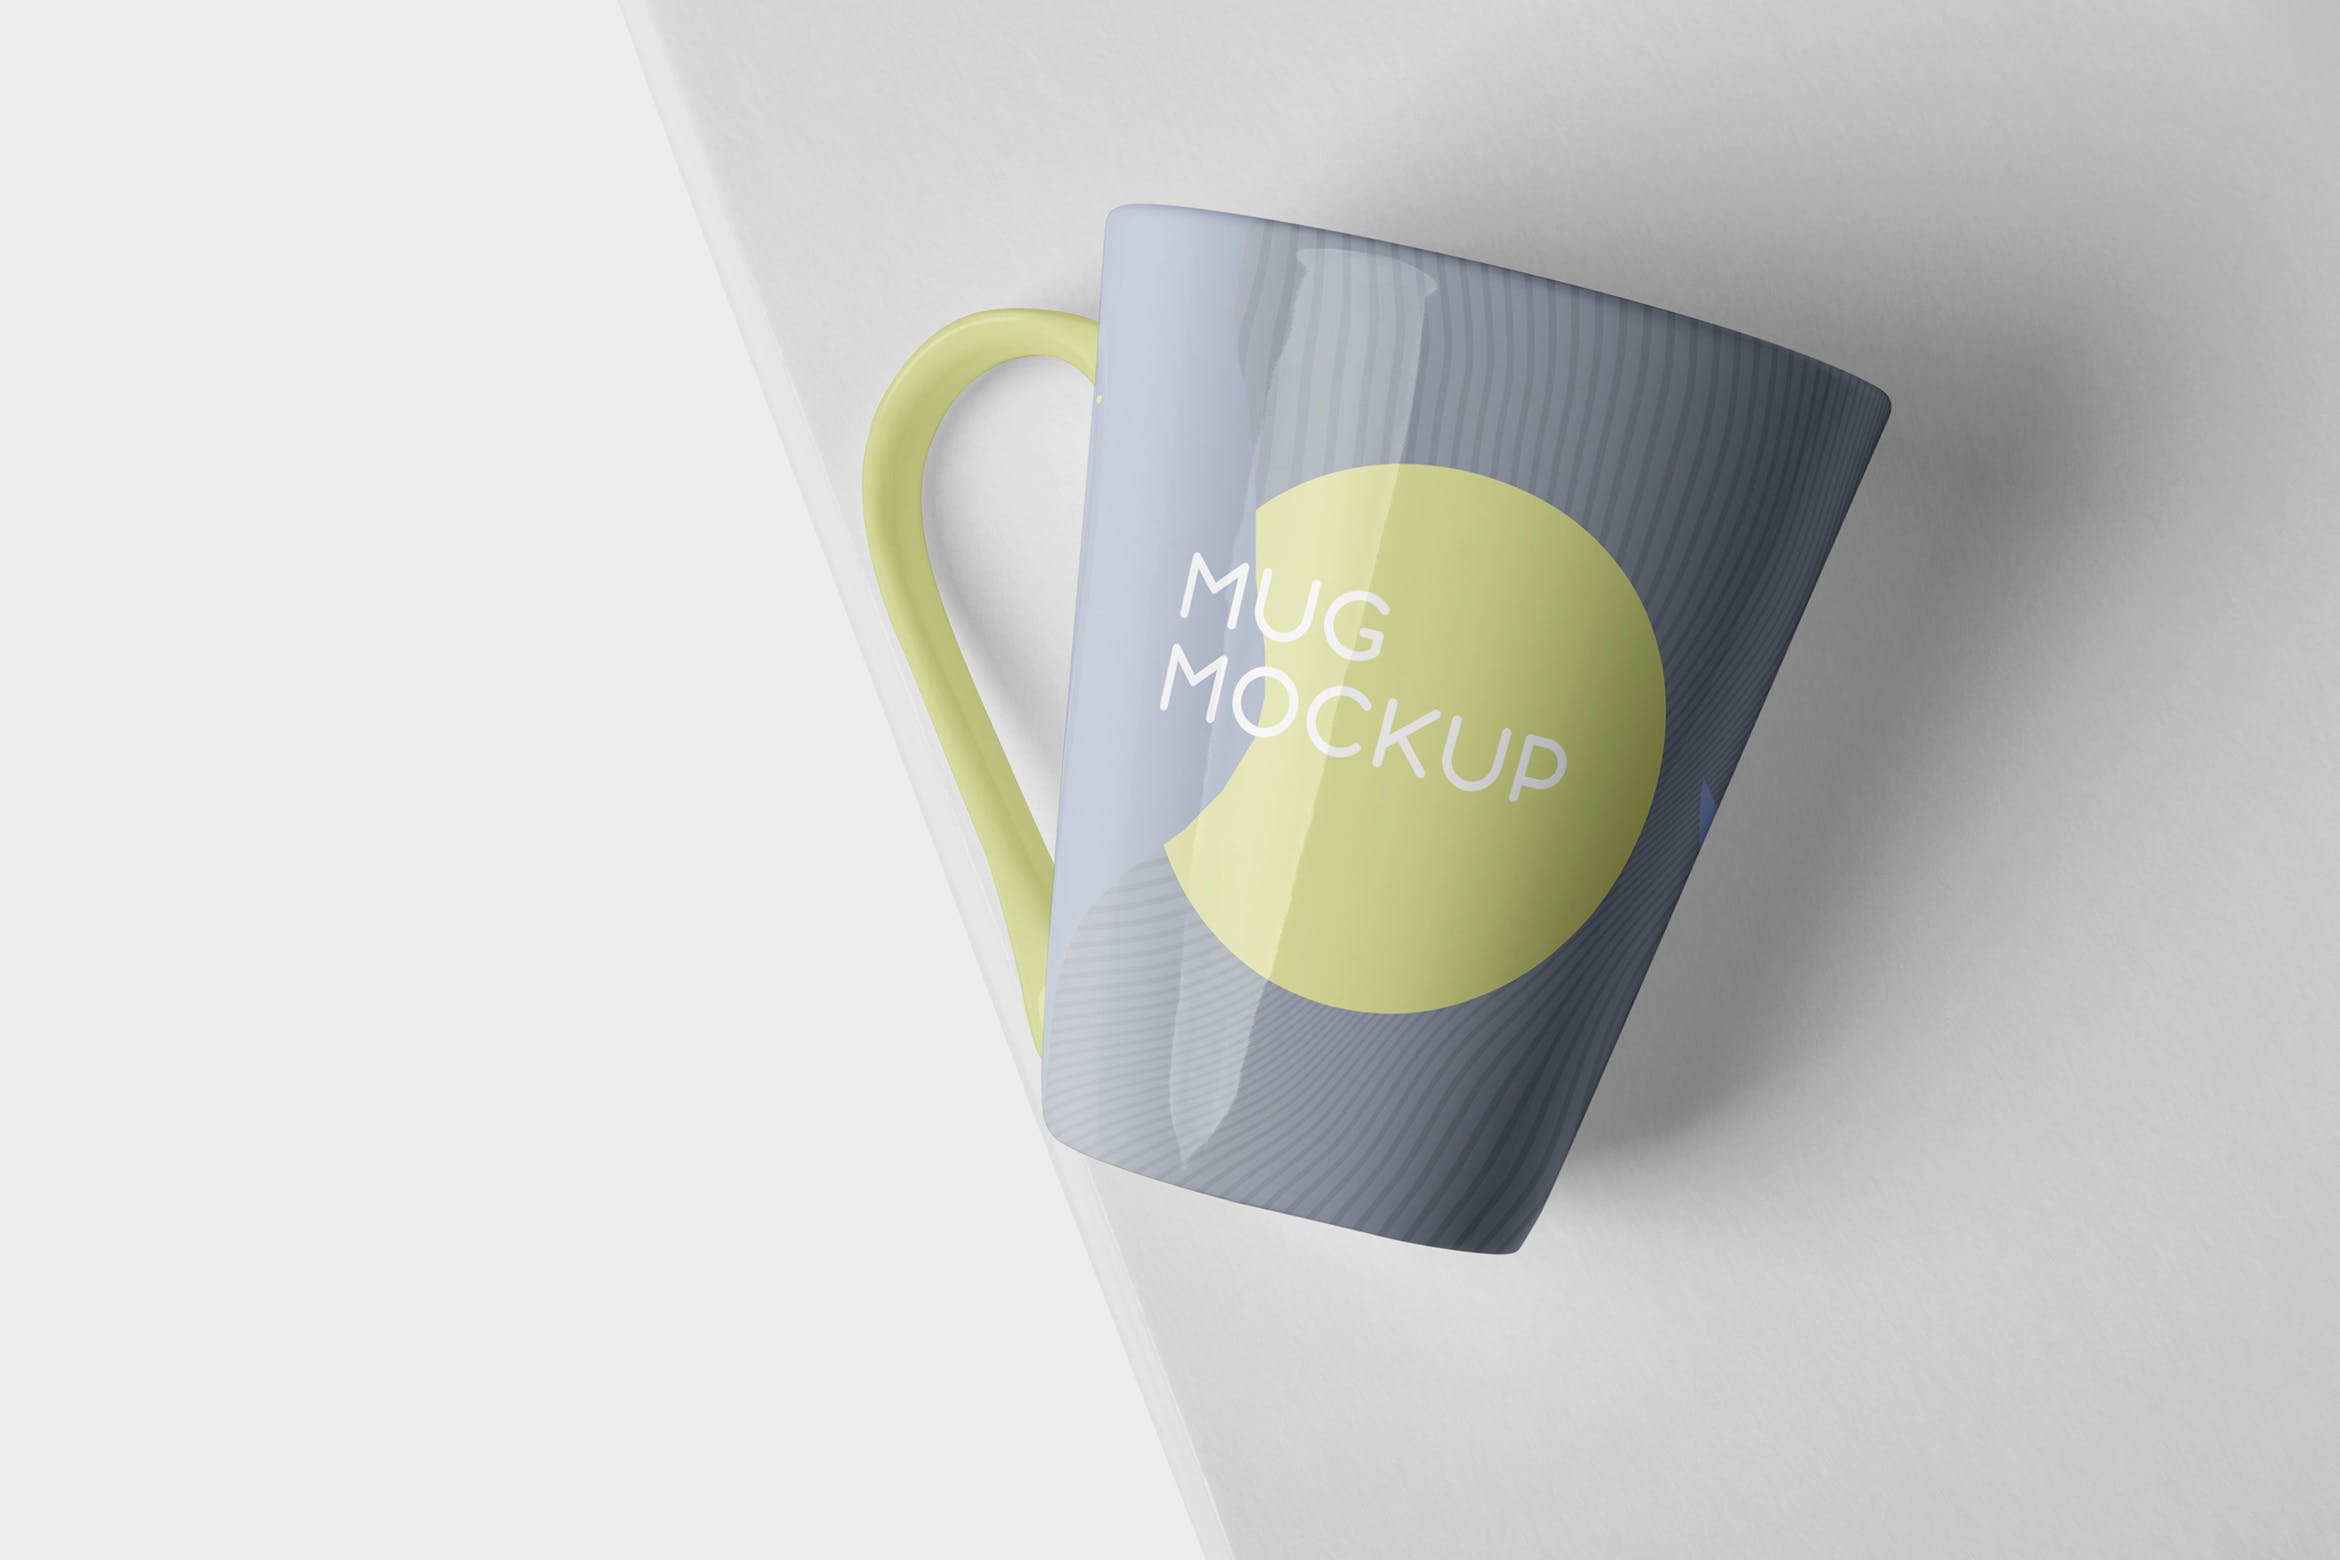 锥形马克杯图案设计第一素材精选 Mug Mockup – Cone Shaped插图